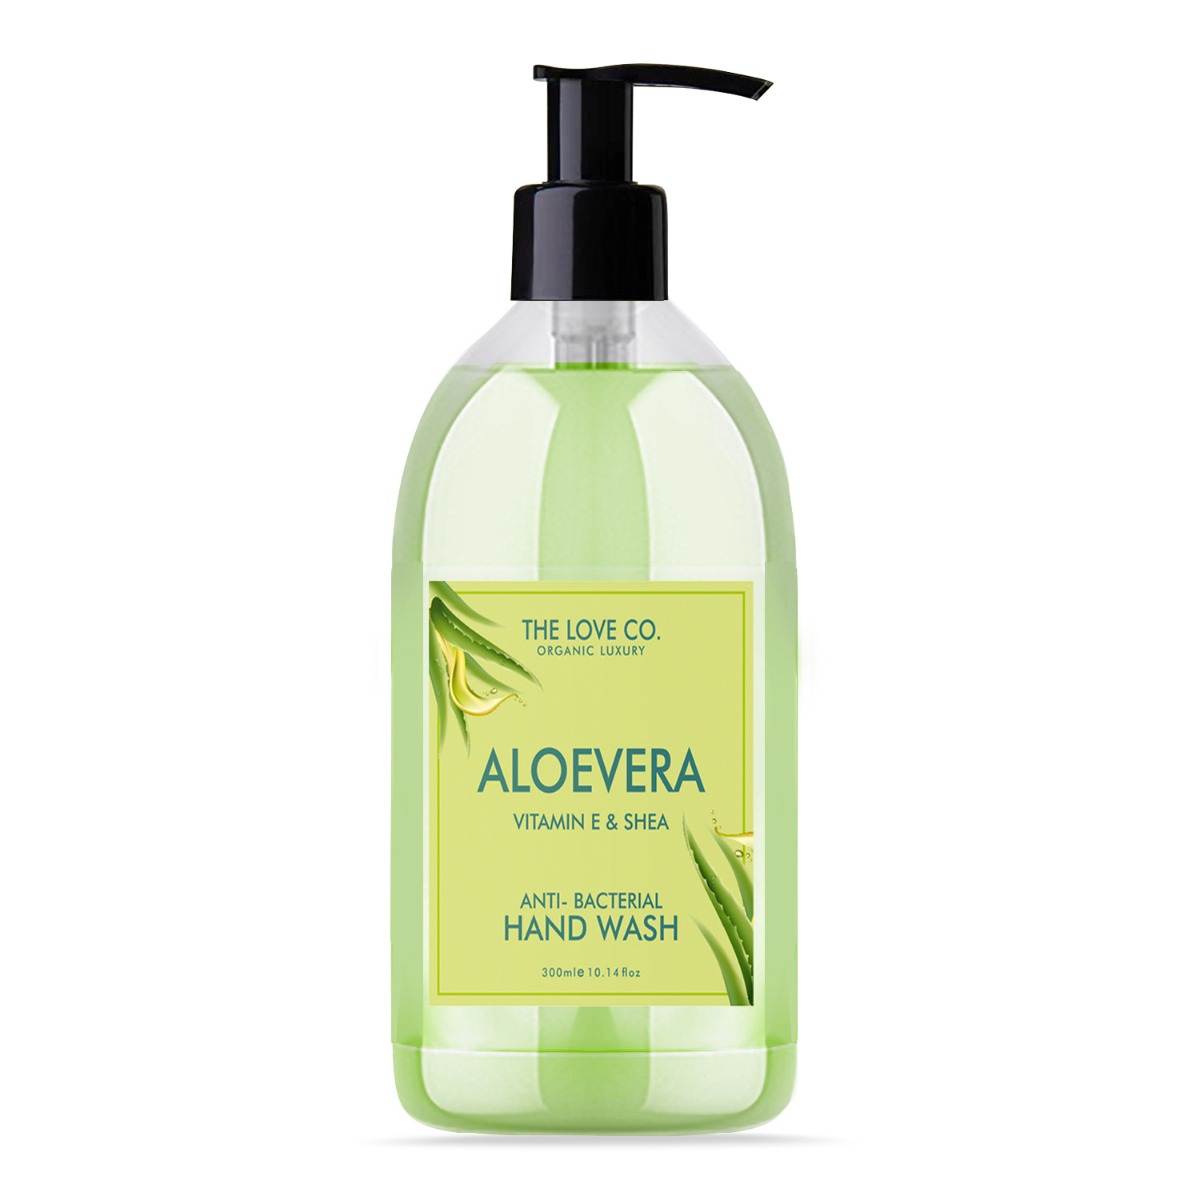 The Love Co. Aloevera Anti-Bacterial Hand Wash, 300ml